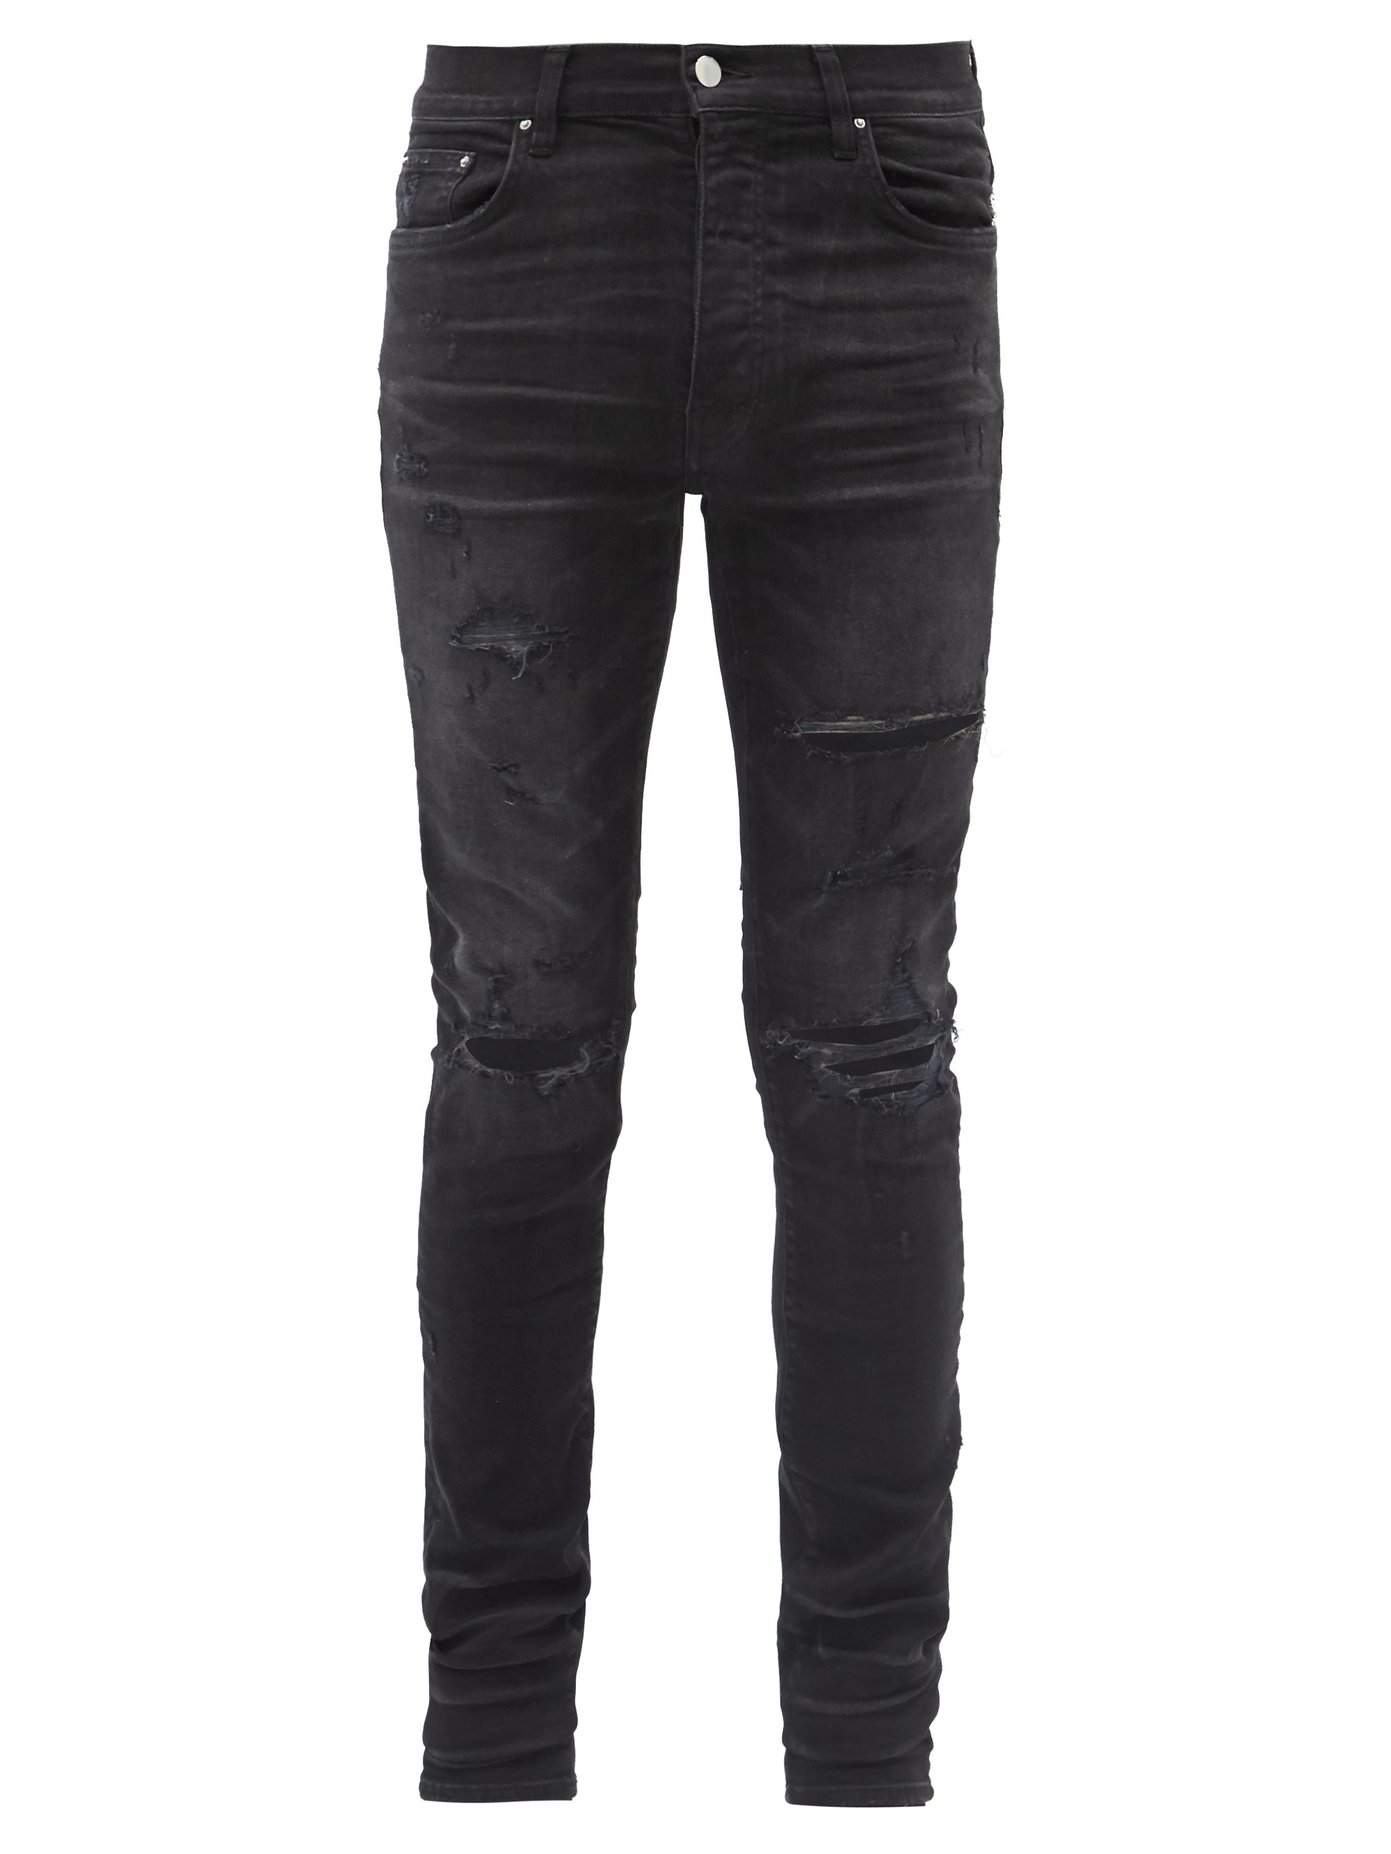 black slim leg jeans